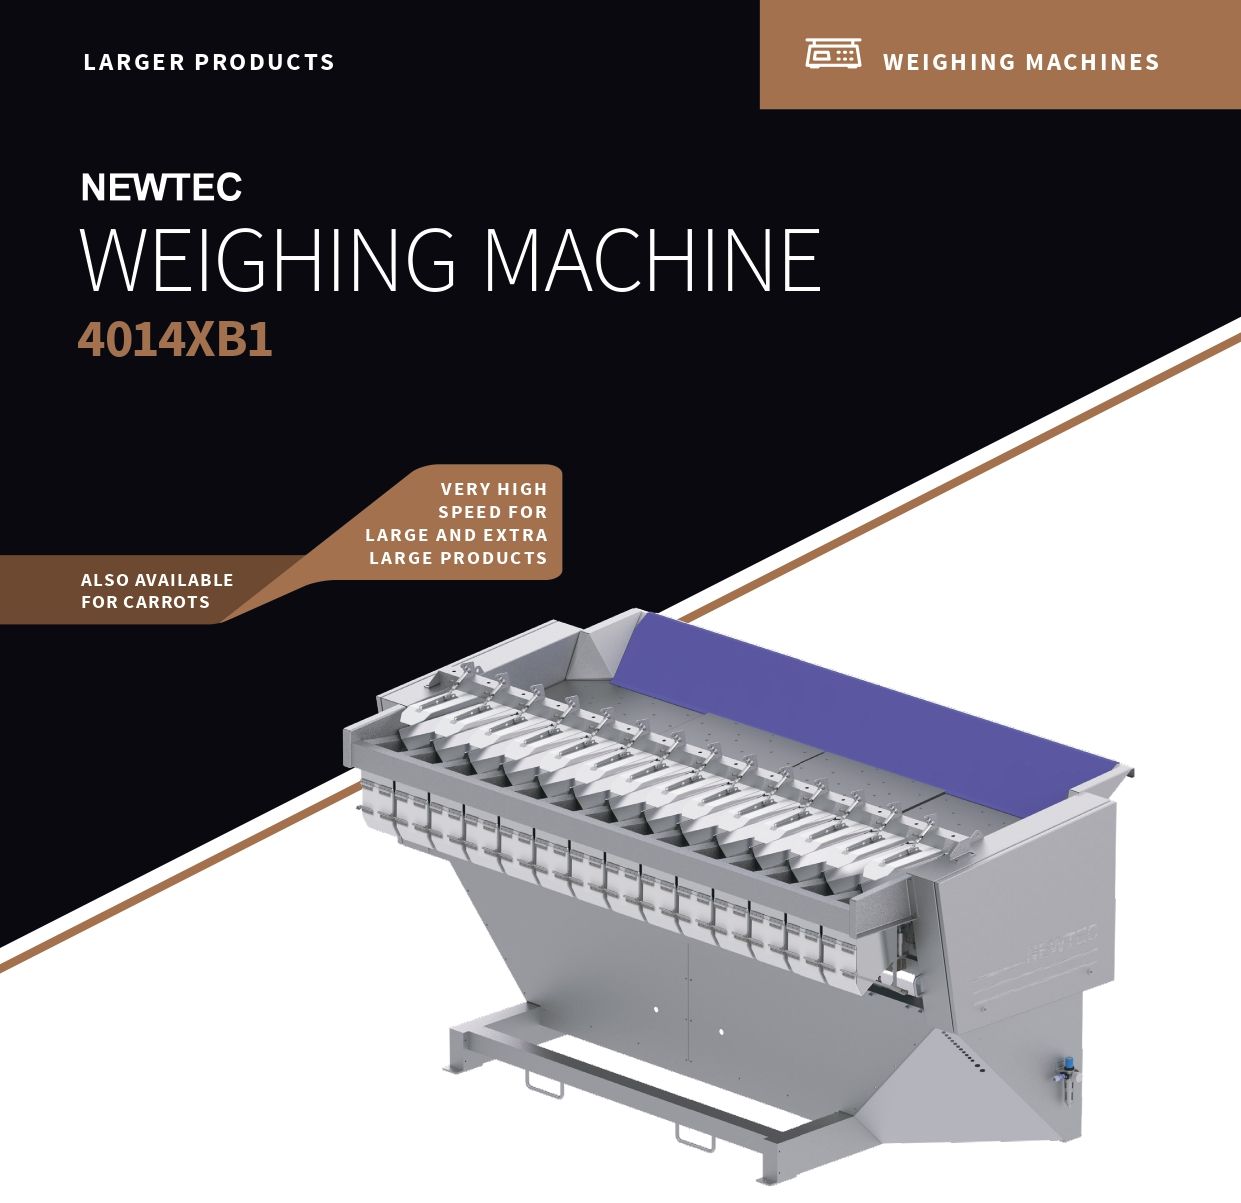 Newtec Weighing Machine 4014XB1 Brochure